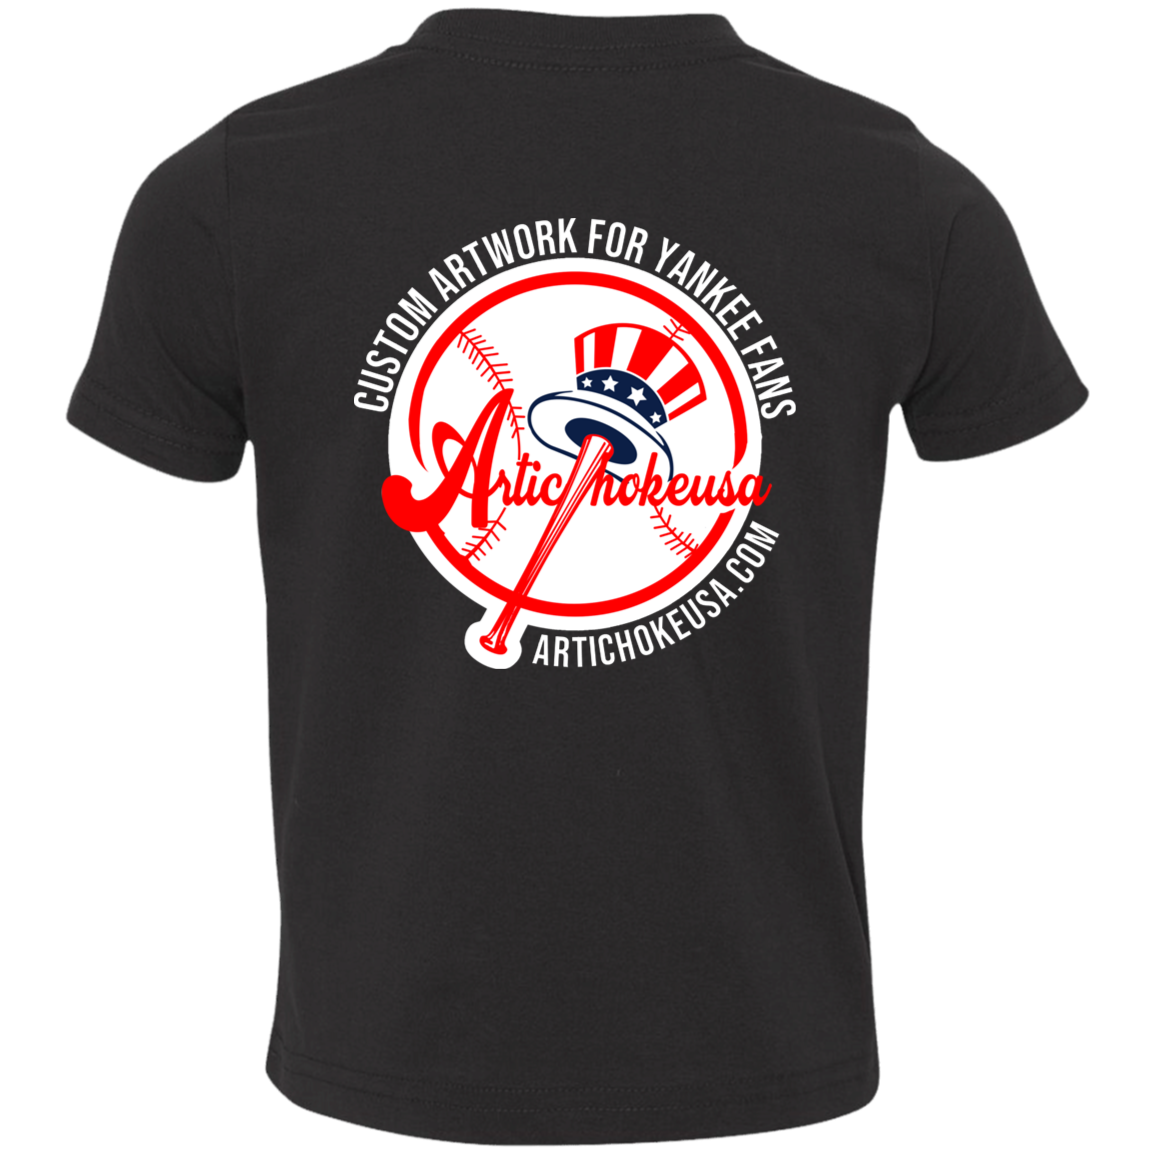 ArtichokeUSA Custom Design. BUCK FOSTON. Toddler Jersey T-Shirt